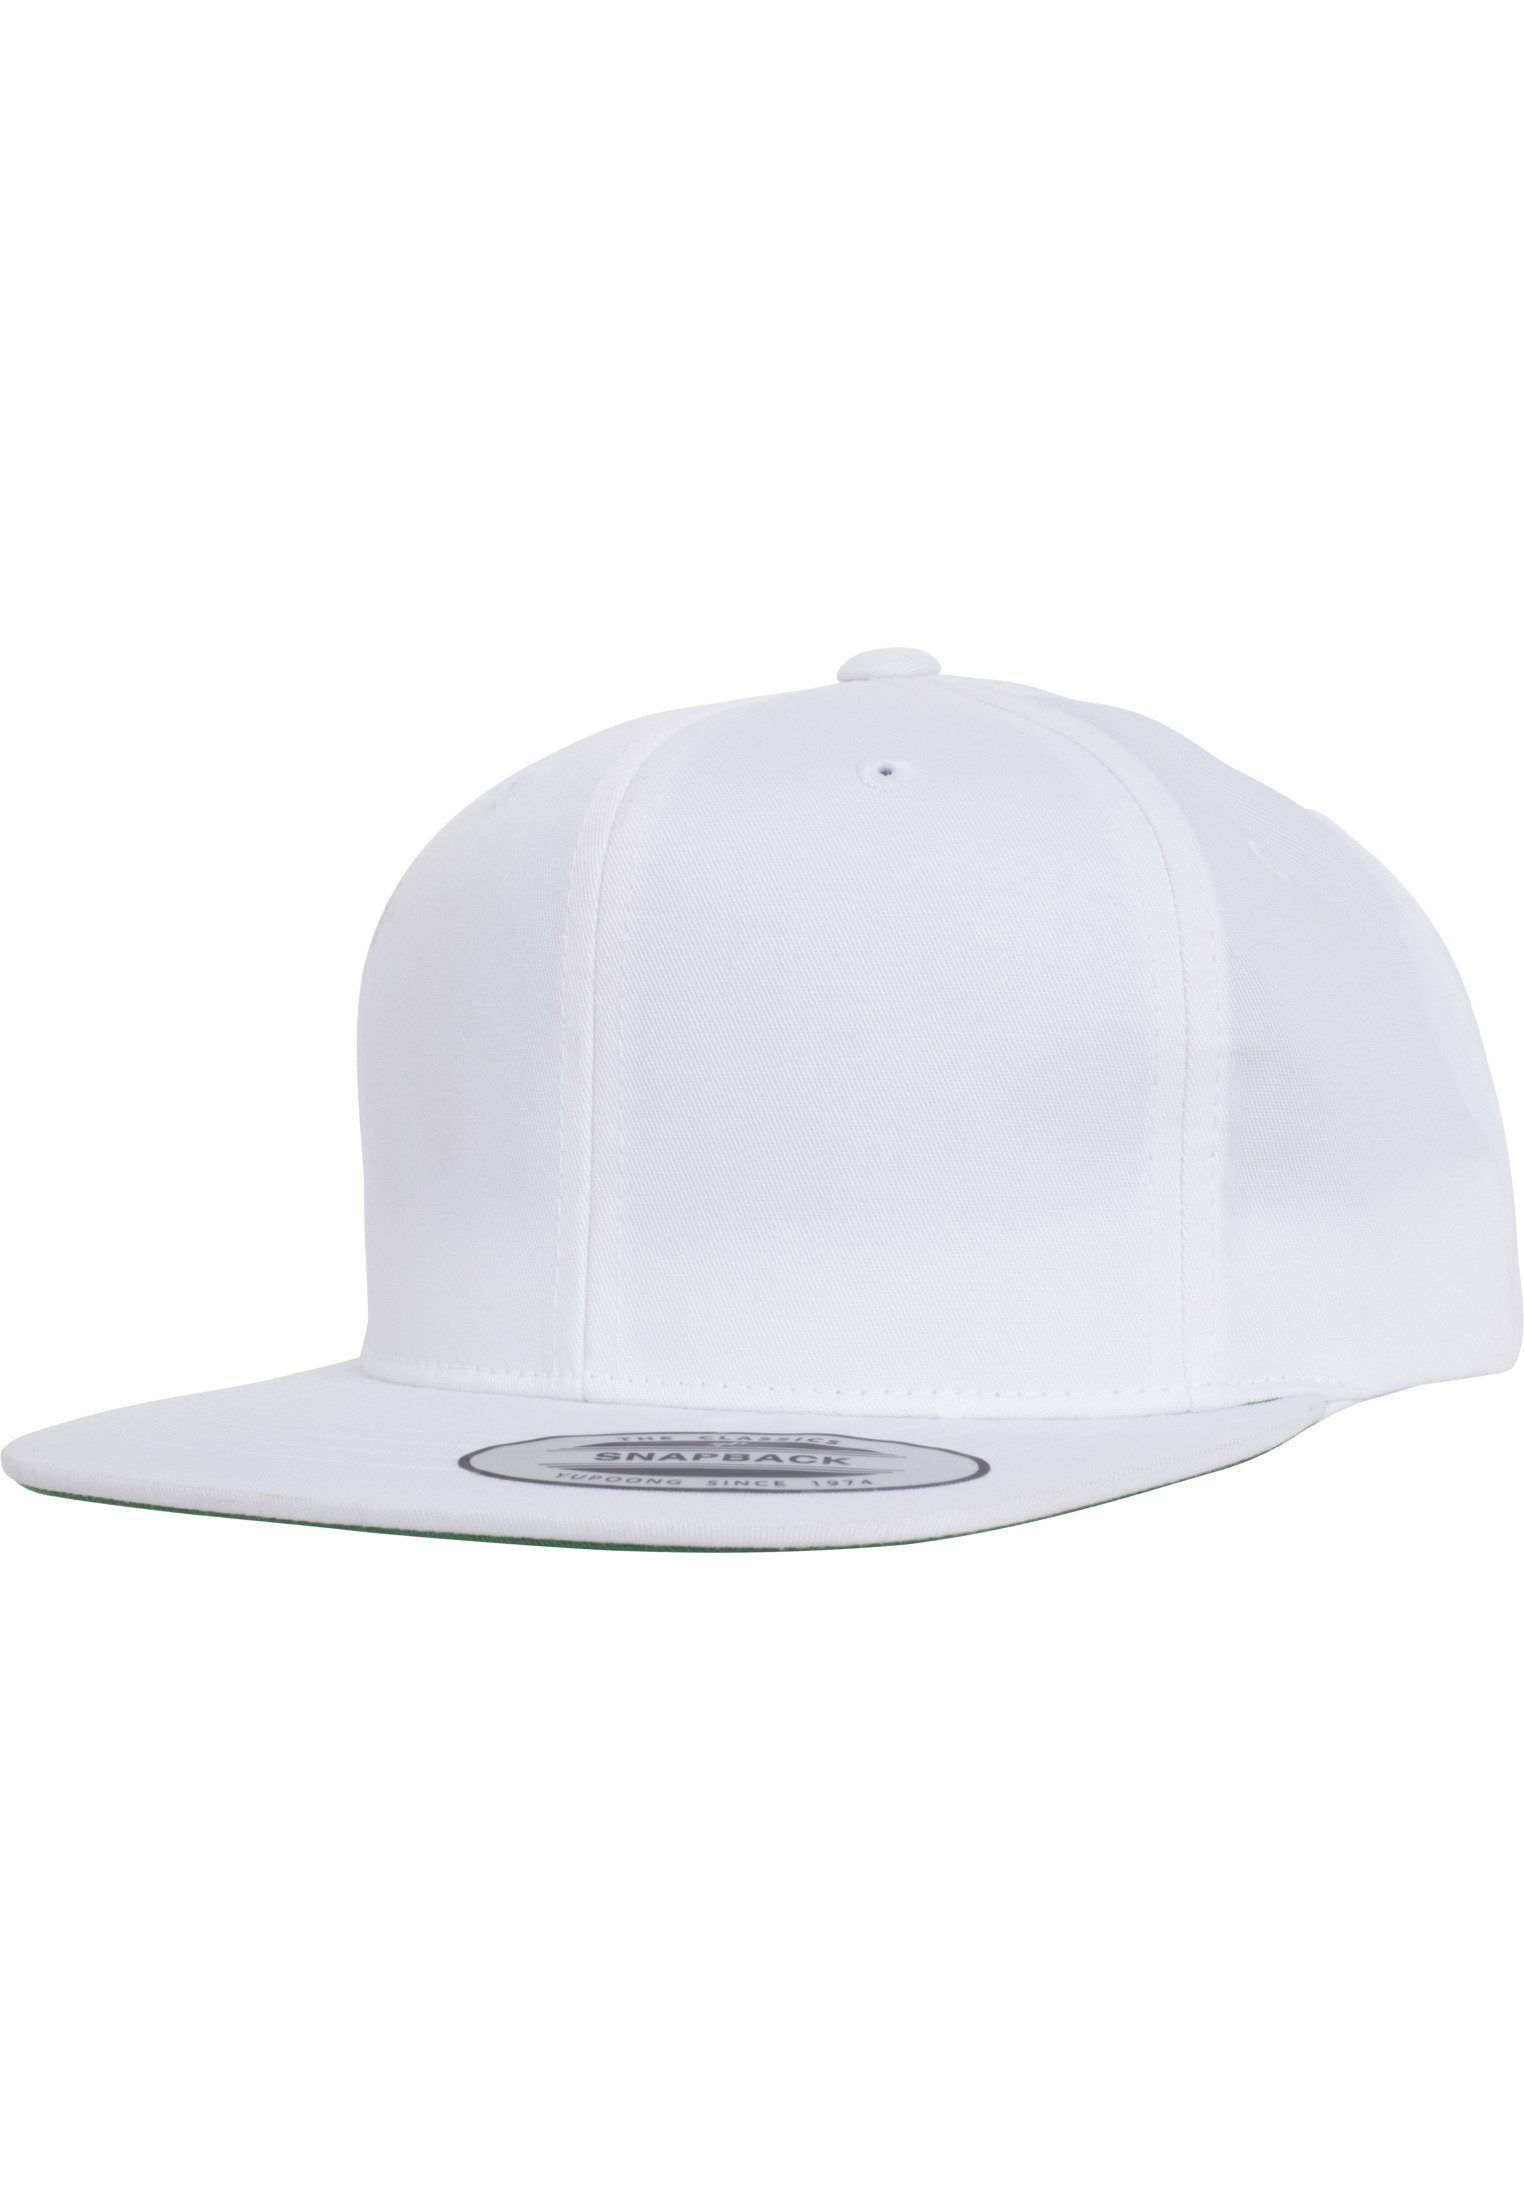 Pro-Style Snapback white Twill Cap Youth Snapback Flexfit Flex Cap